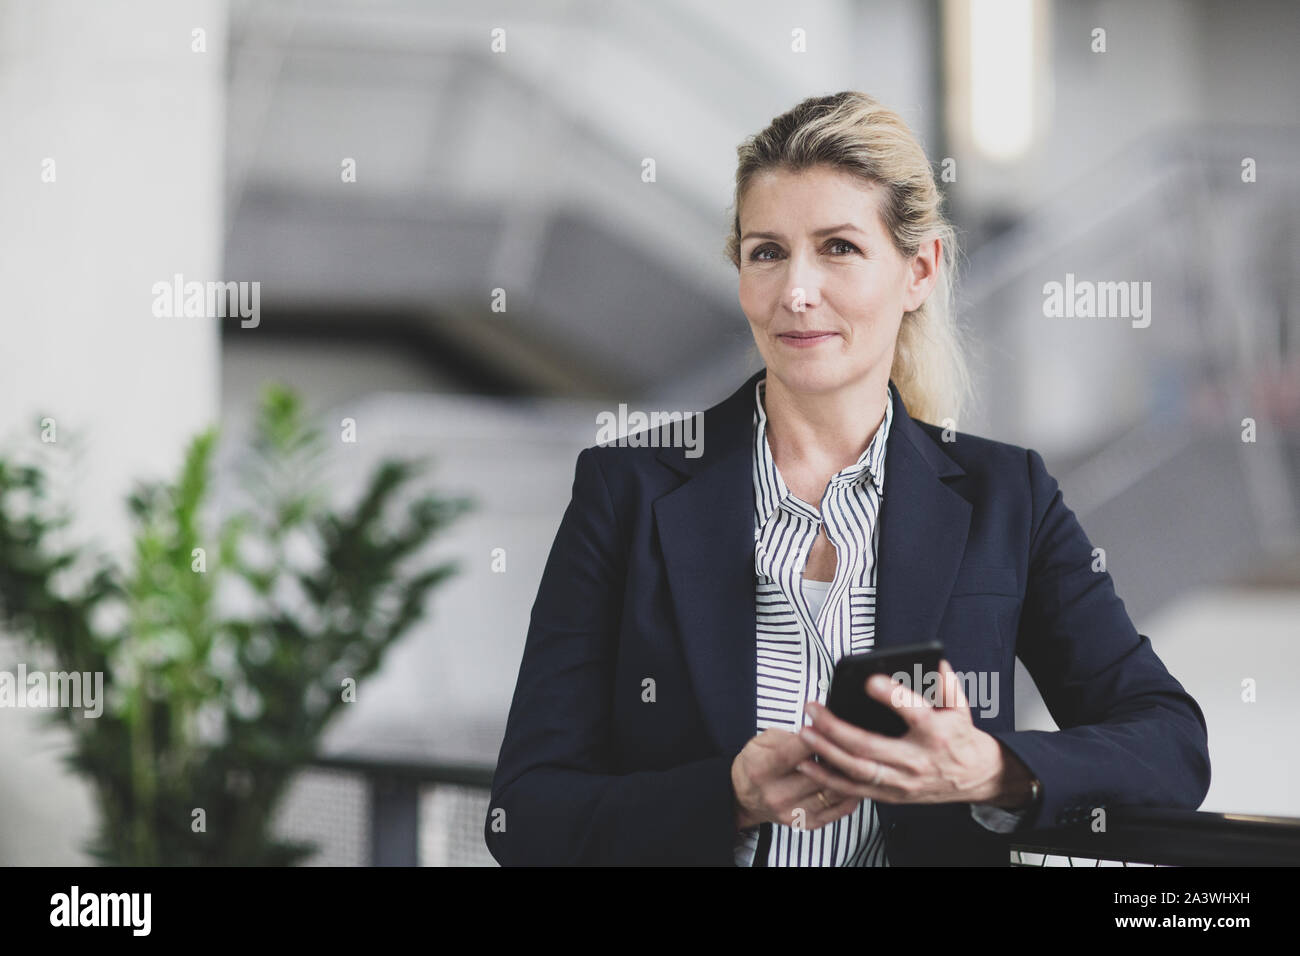 Portrait of senior female business executive holding a smartphone Stock Photo